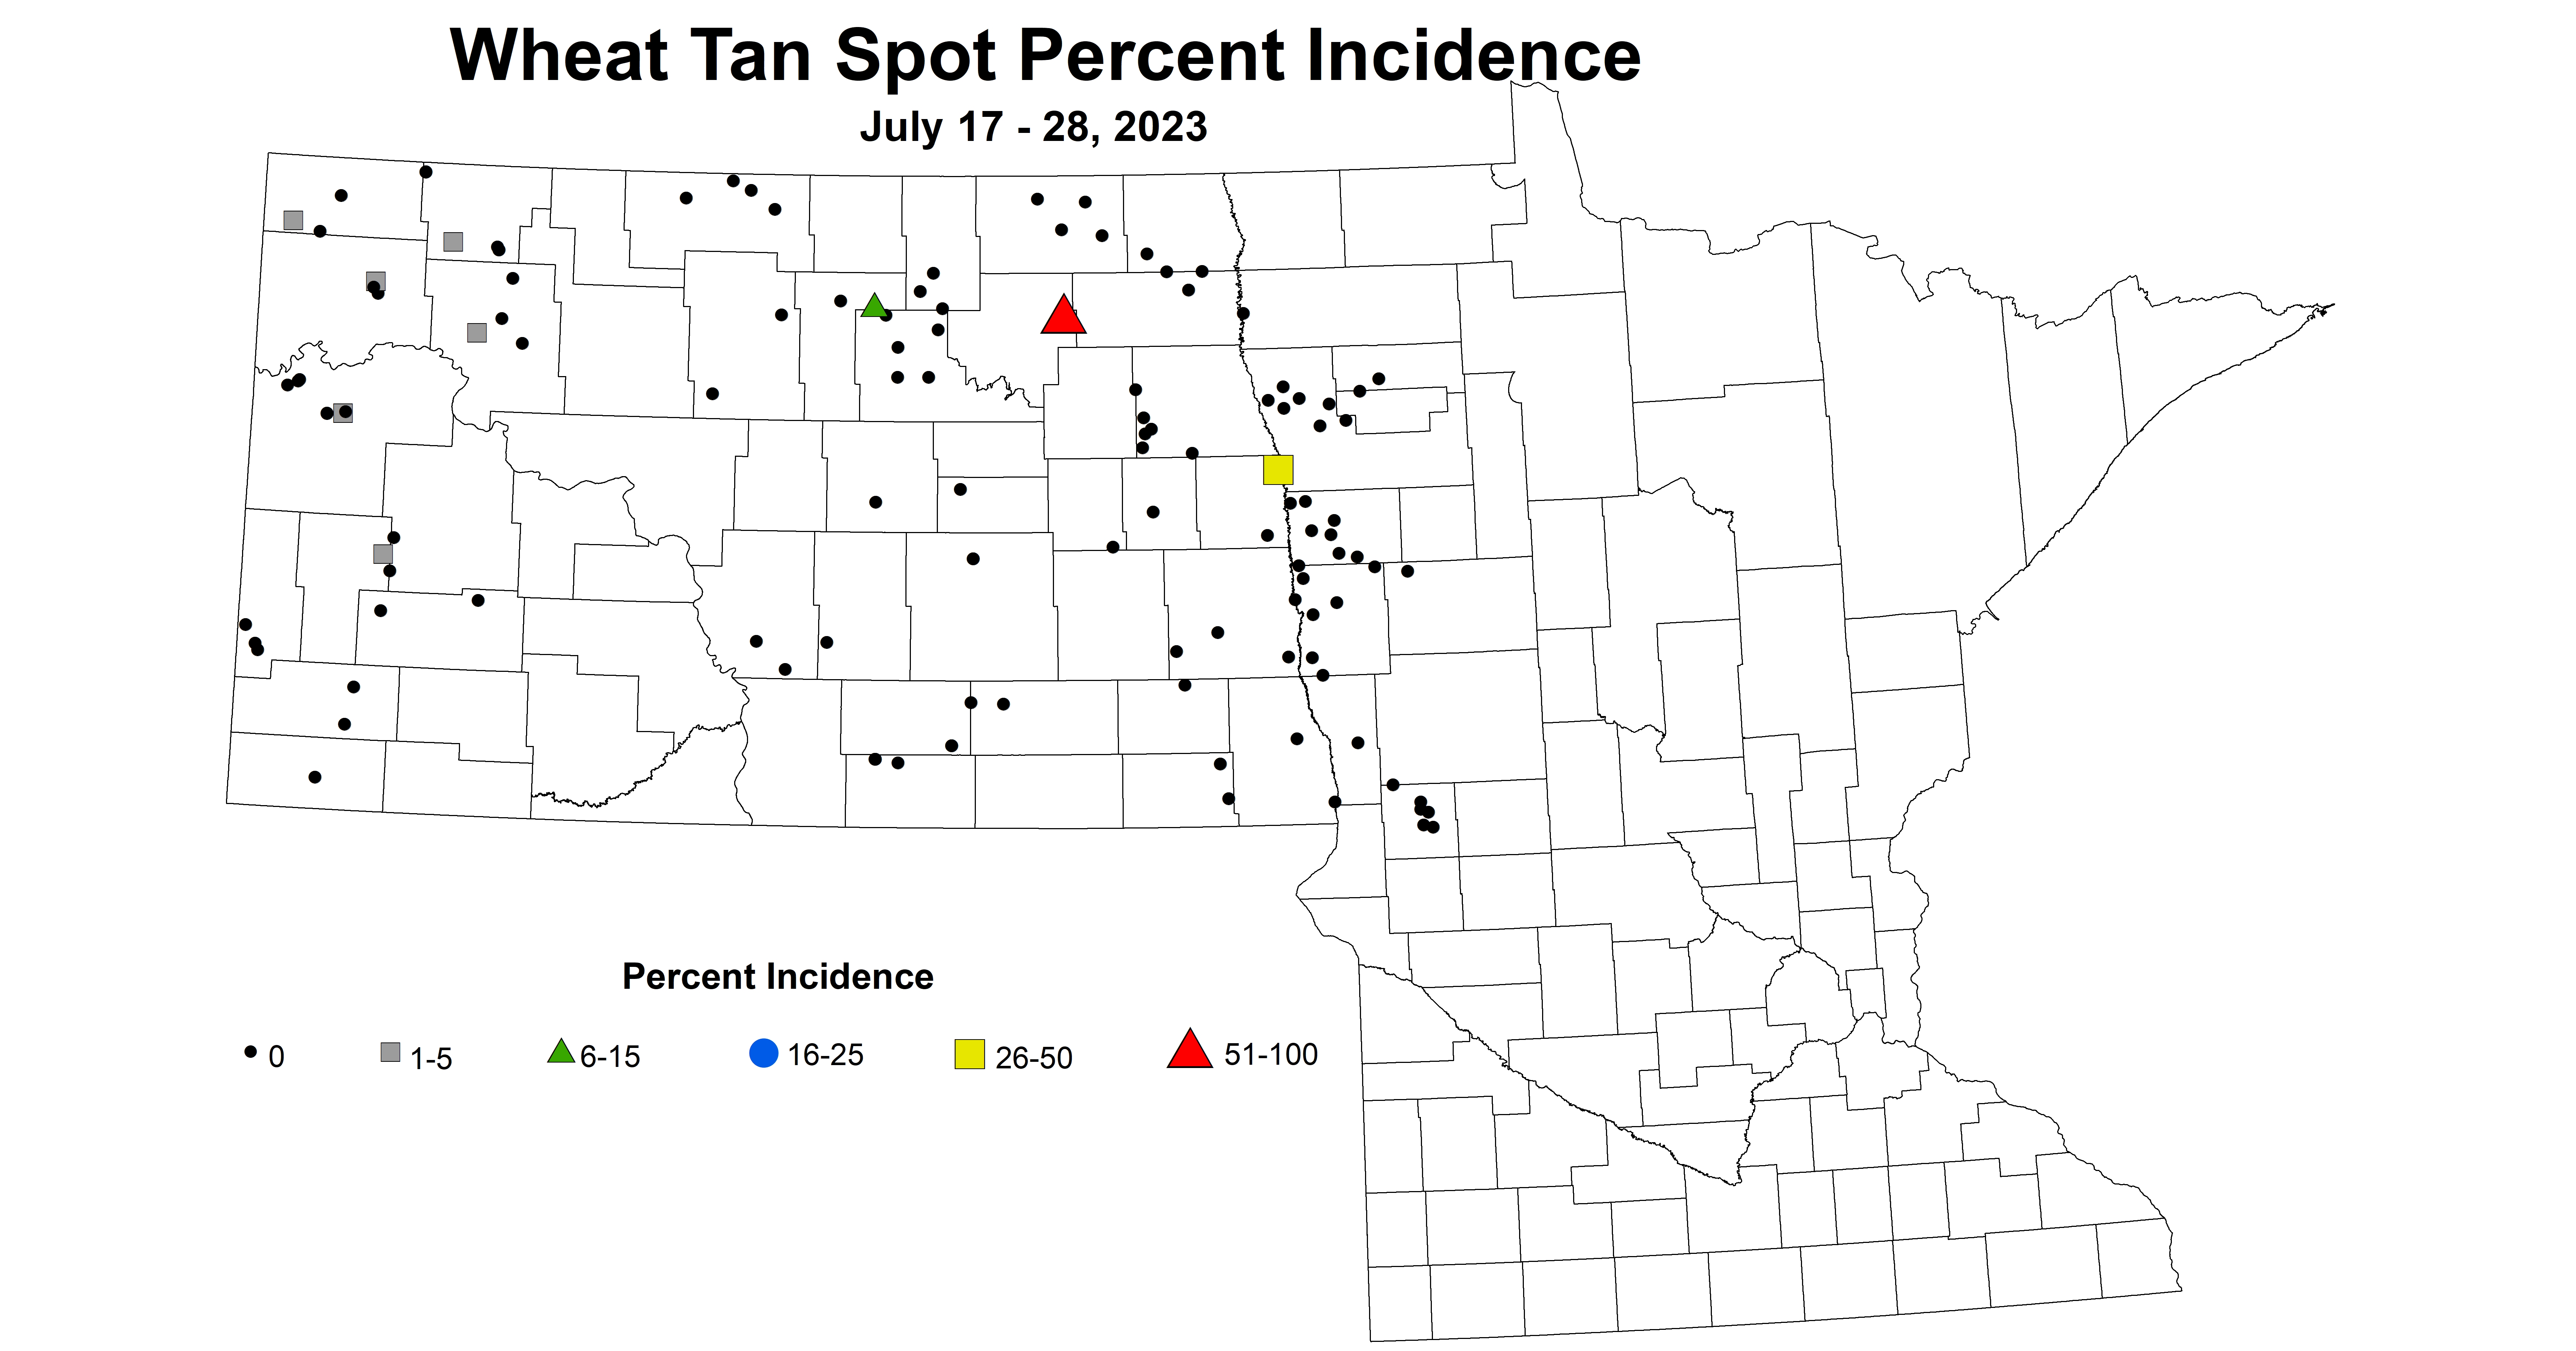 wheat tan spot incidence July 17-28 2023